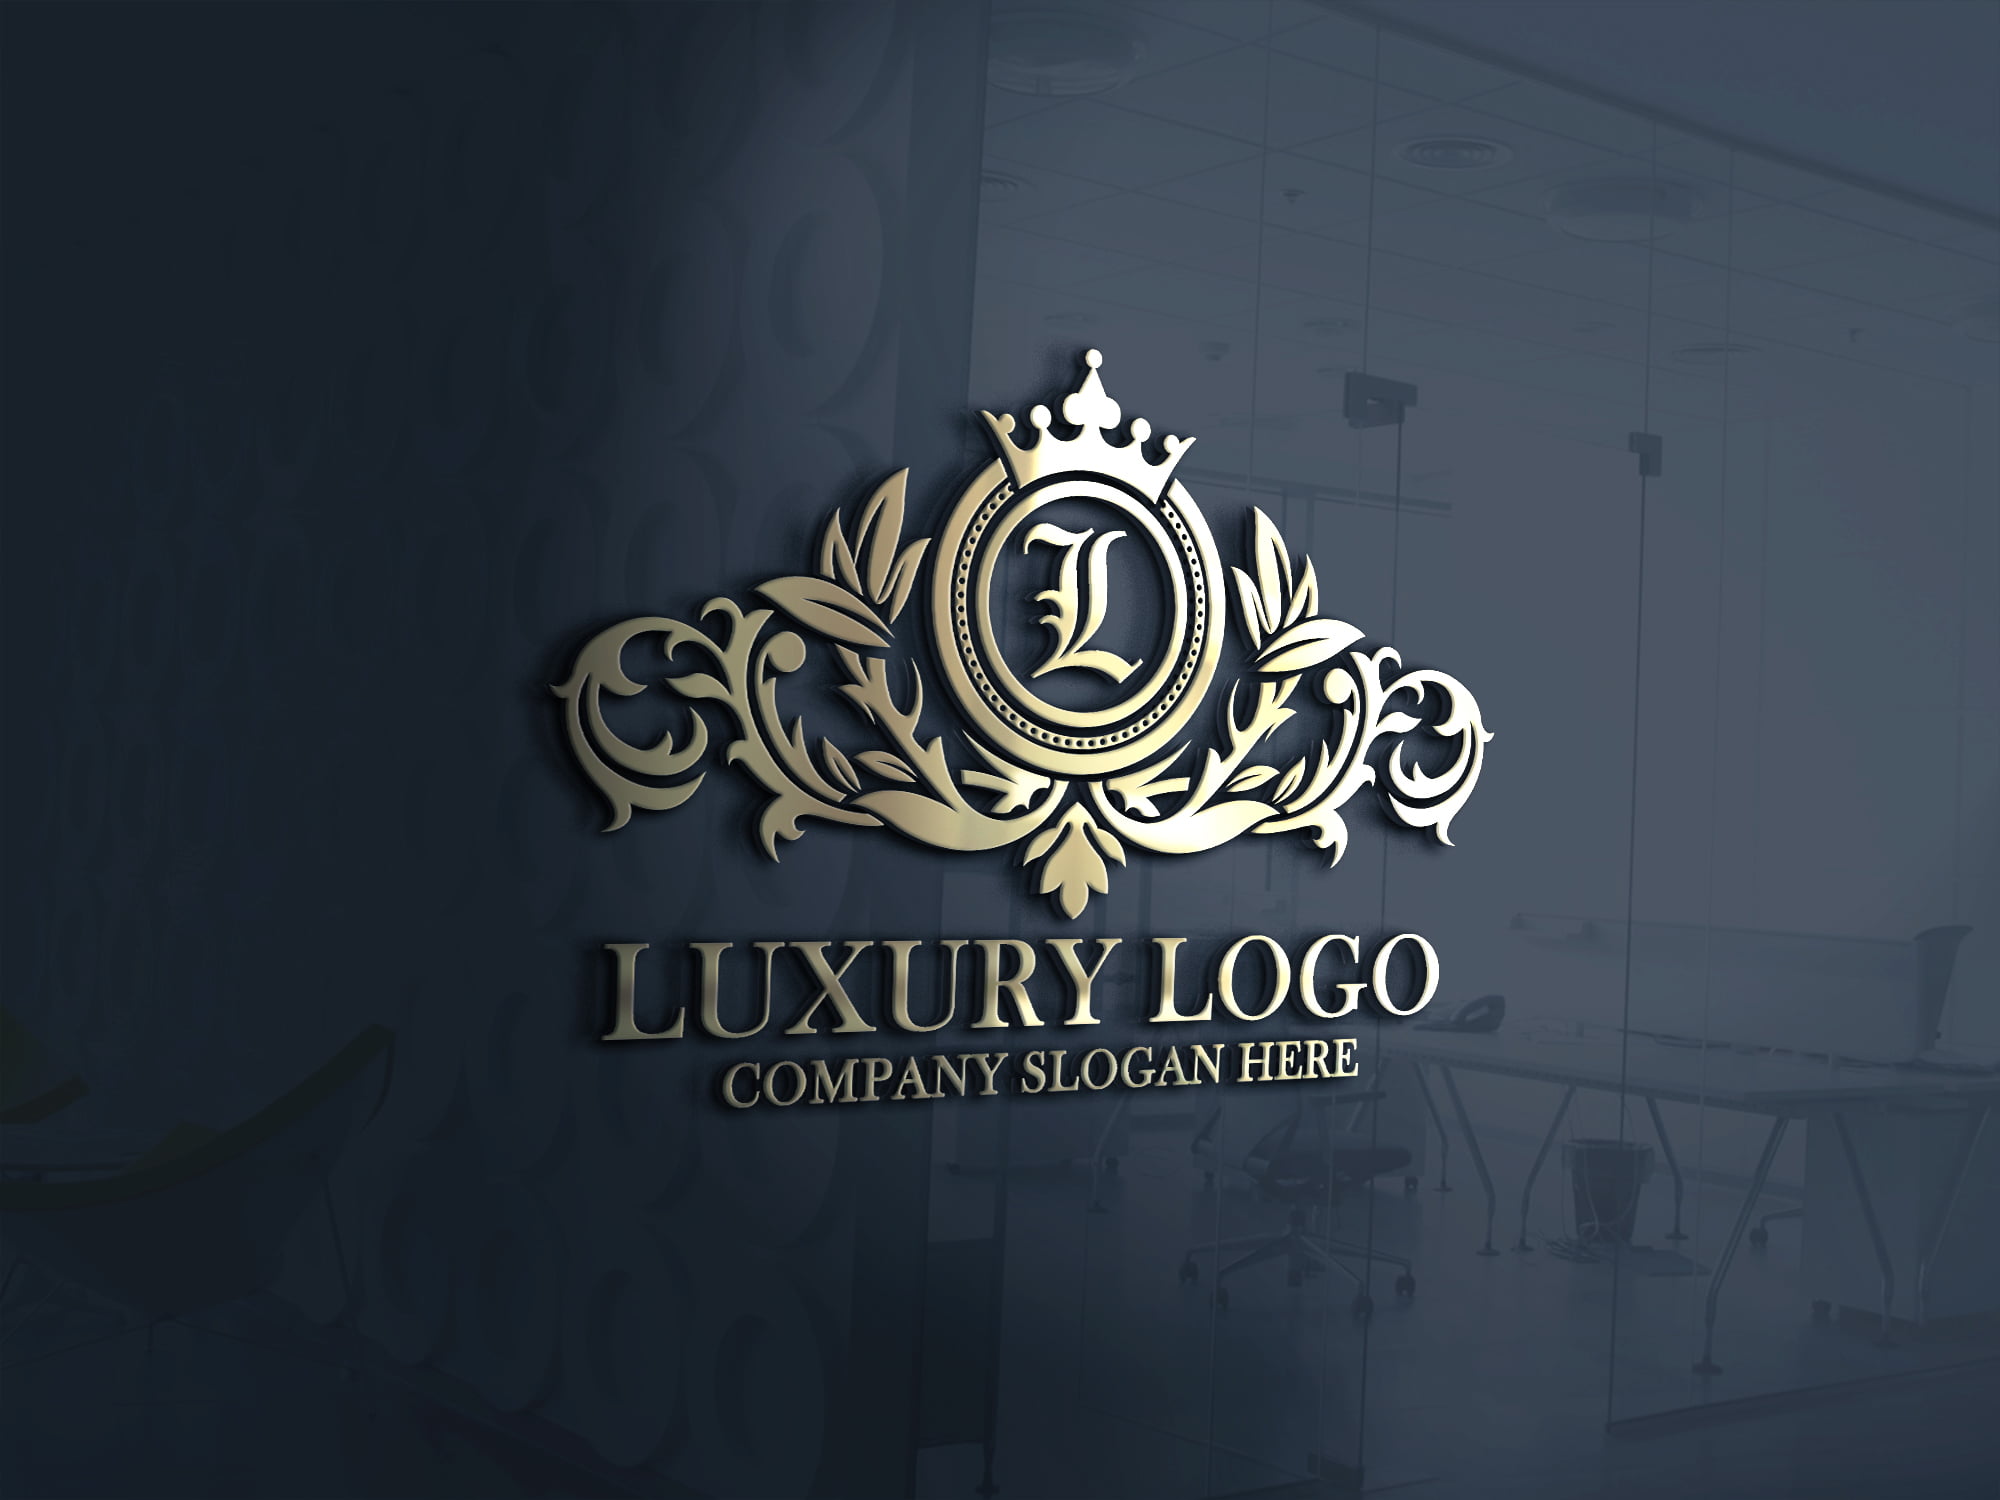 Online logo design free - plmsmith